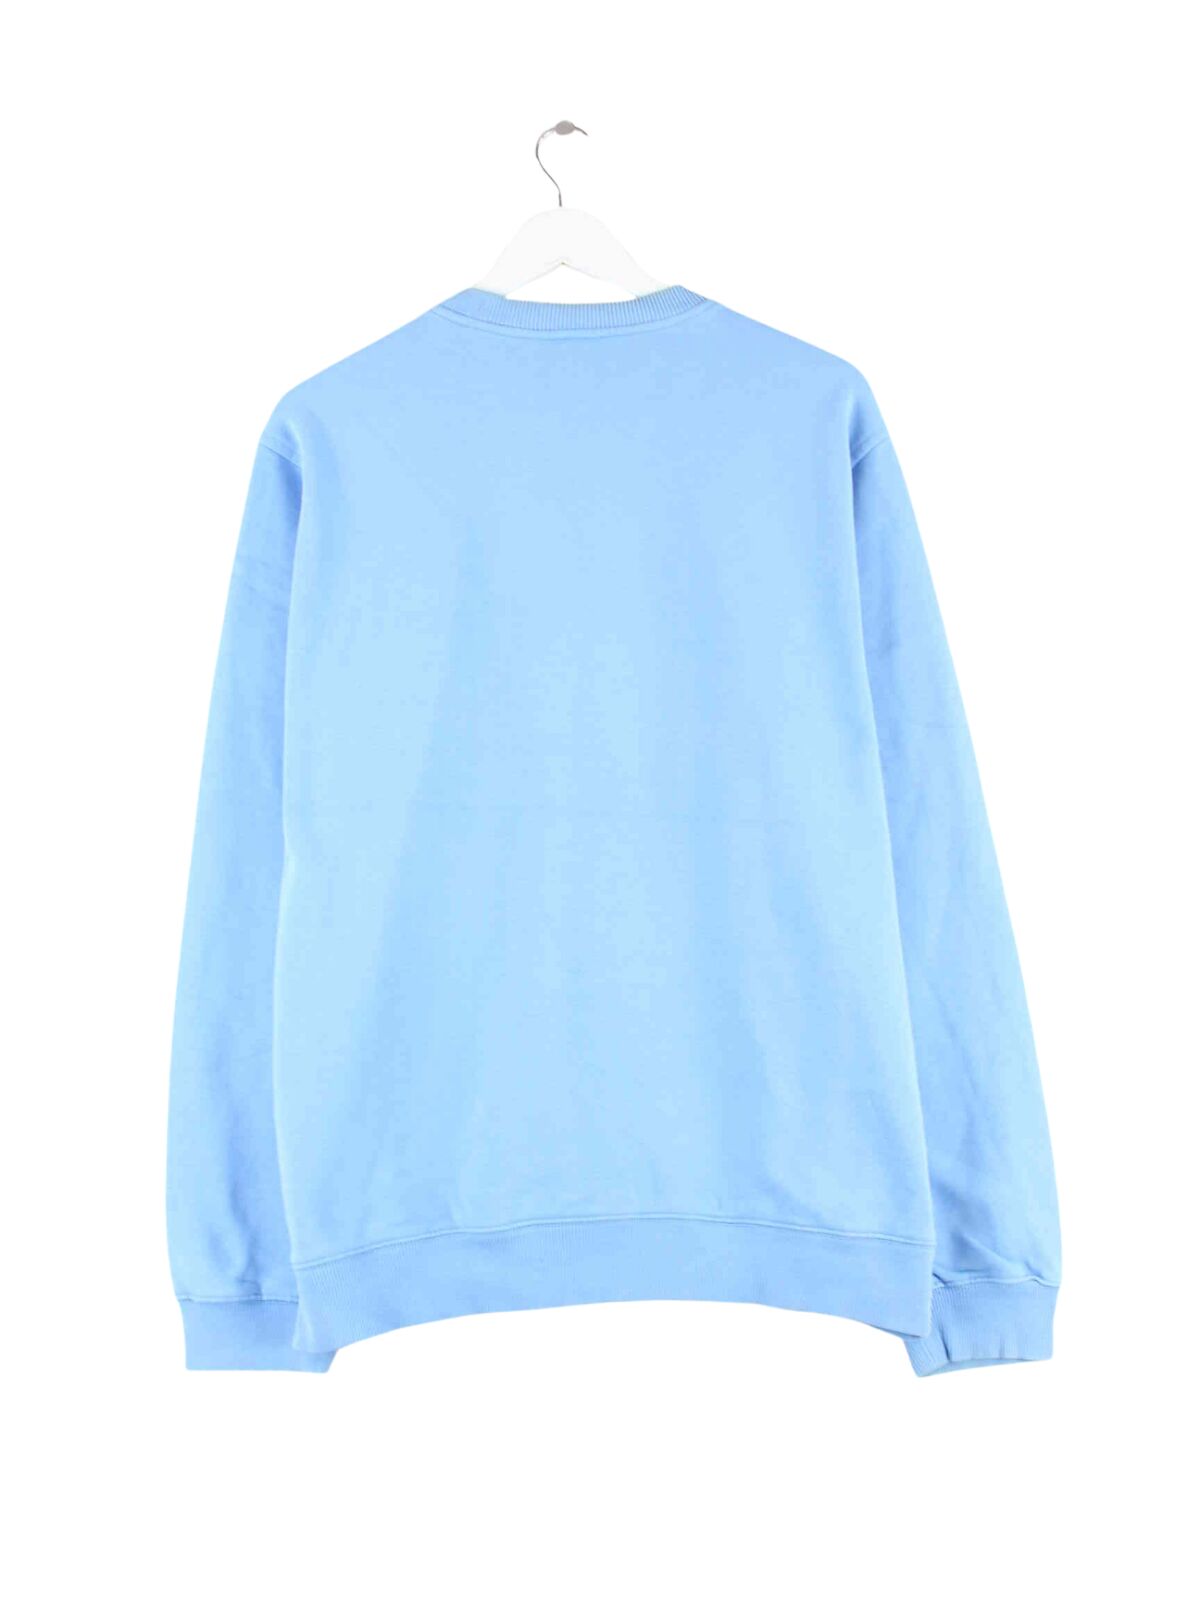 Reebok 00s Embroidered Sweater Blau M (back image)